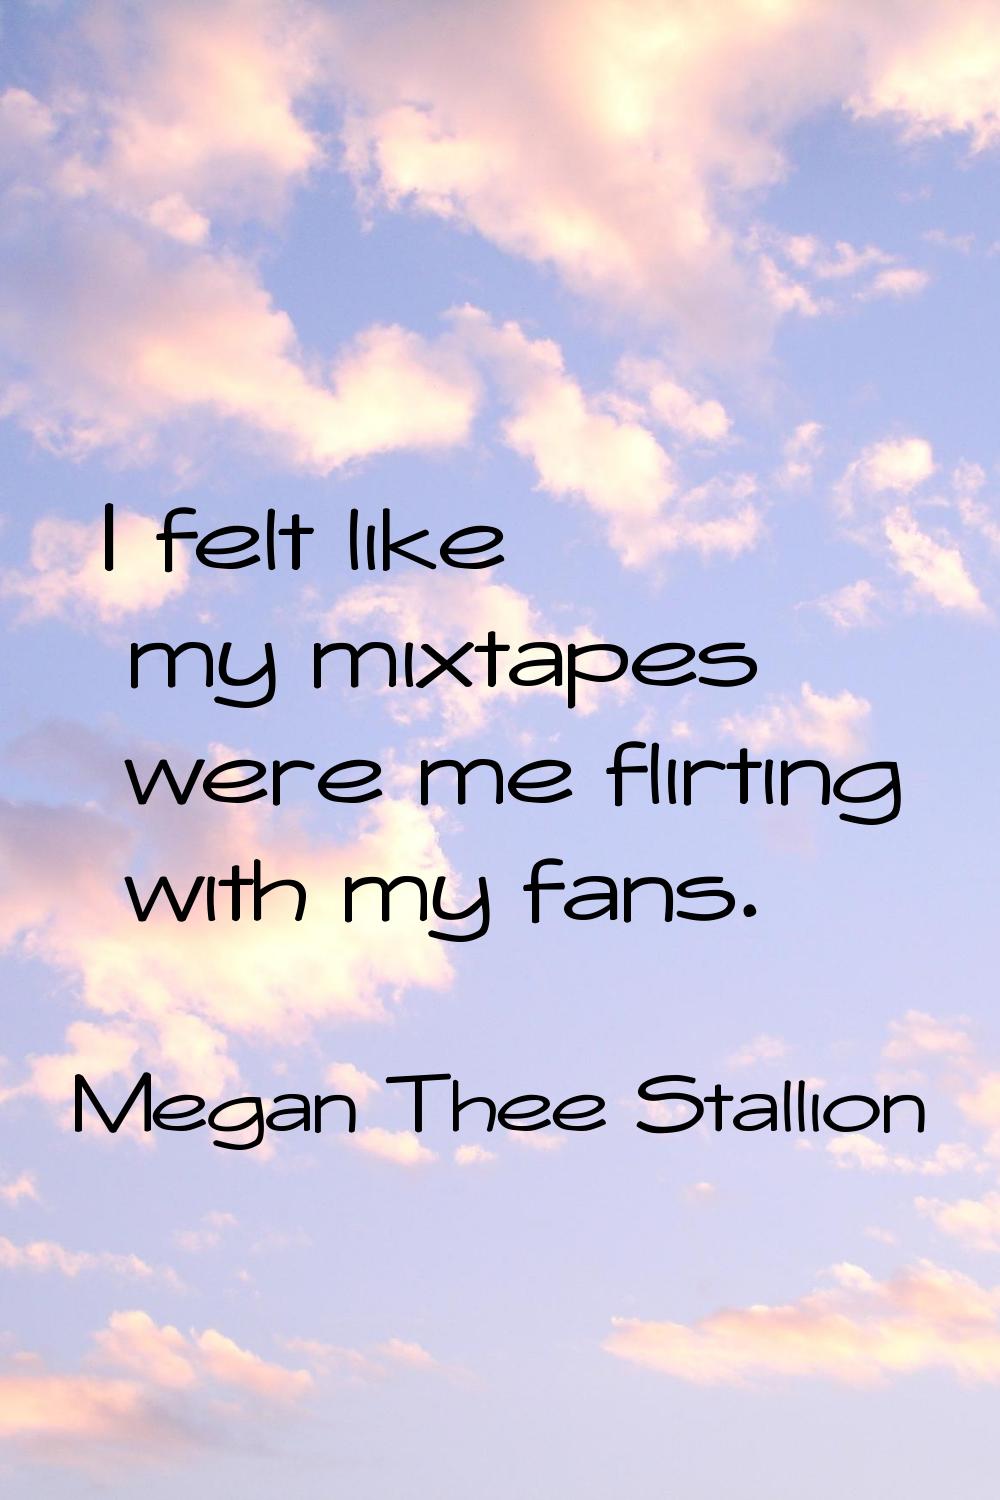 I felt like my mixtapes were me flirting with my fans.